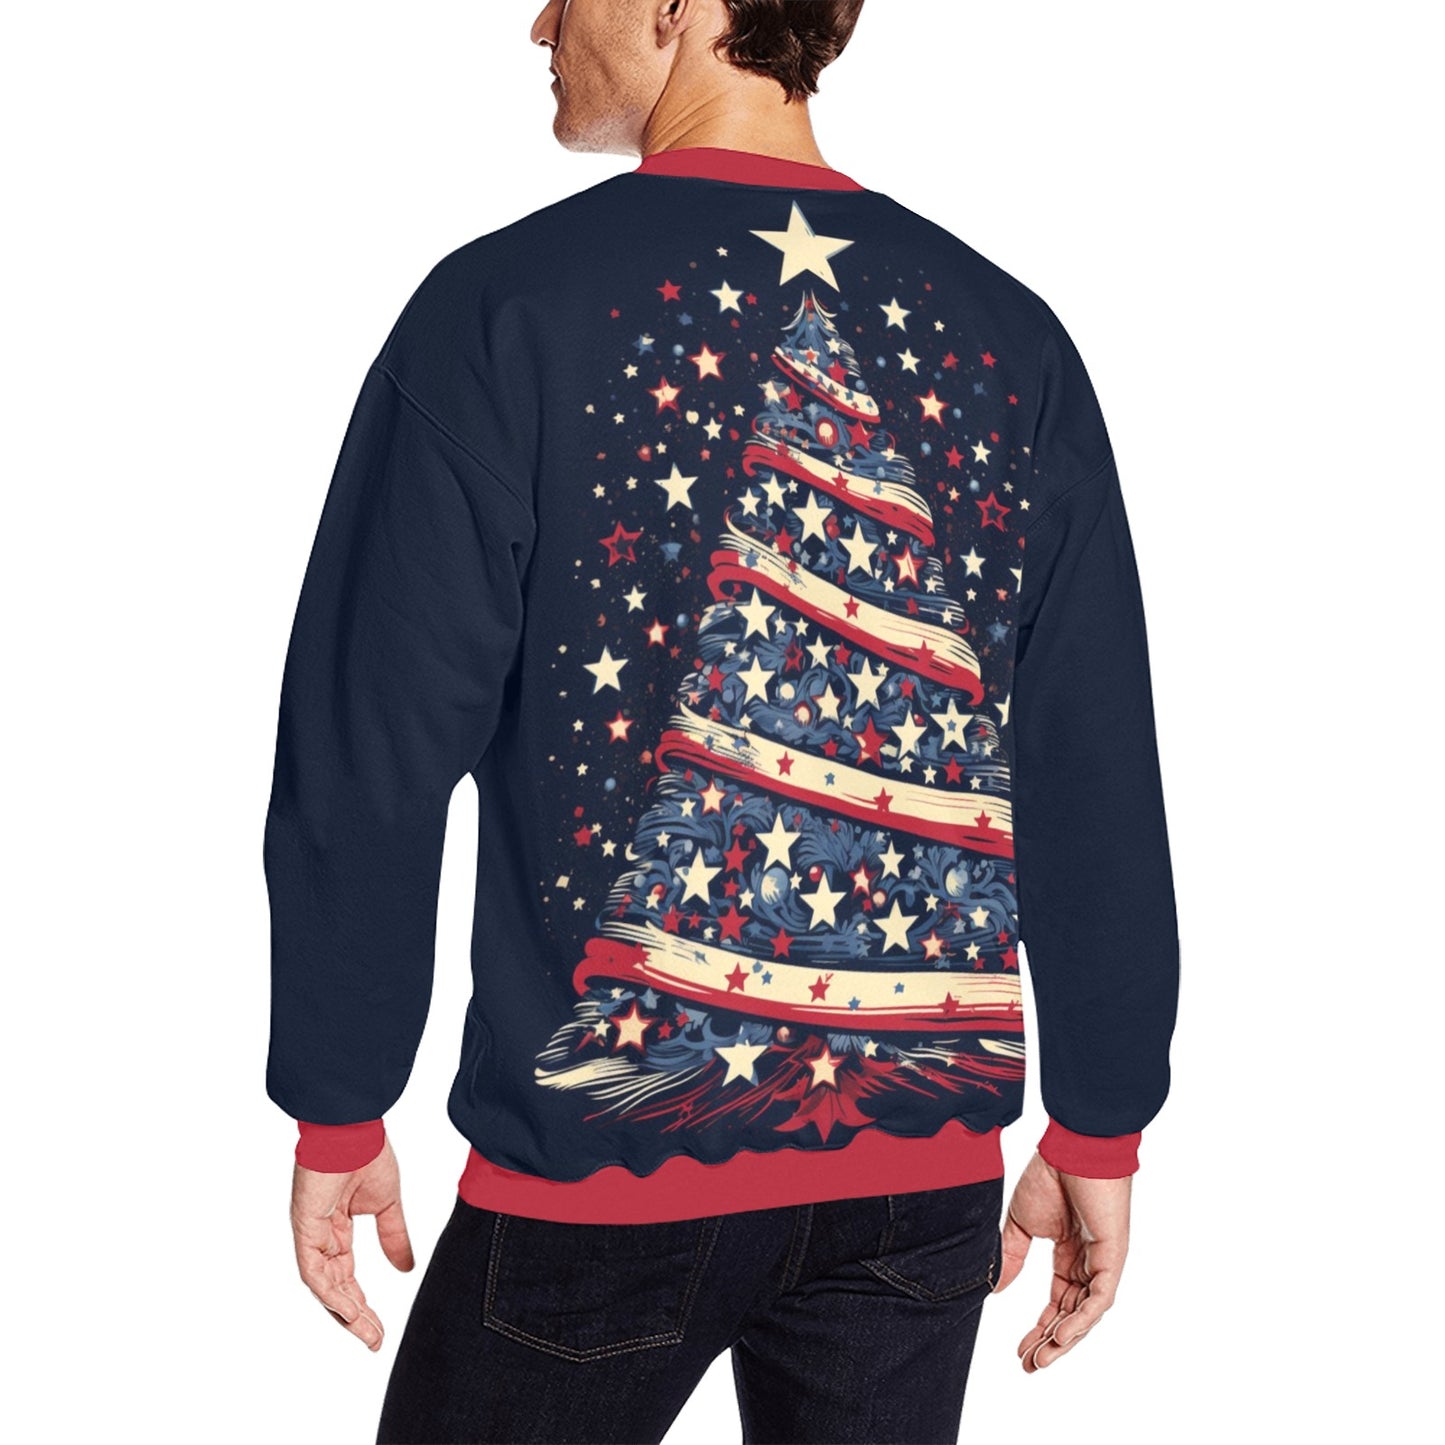 American Christmas Tree Ugly Sweater, Flag Red White Blue Xmas Print Women Men Retro Vintage Party Winter Holiday Plus Size Sweatshirt